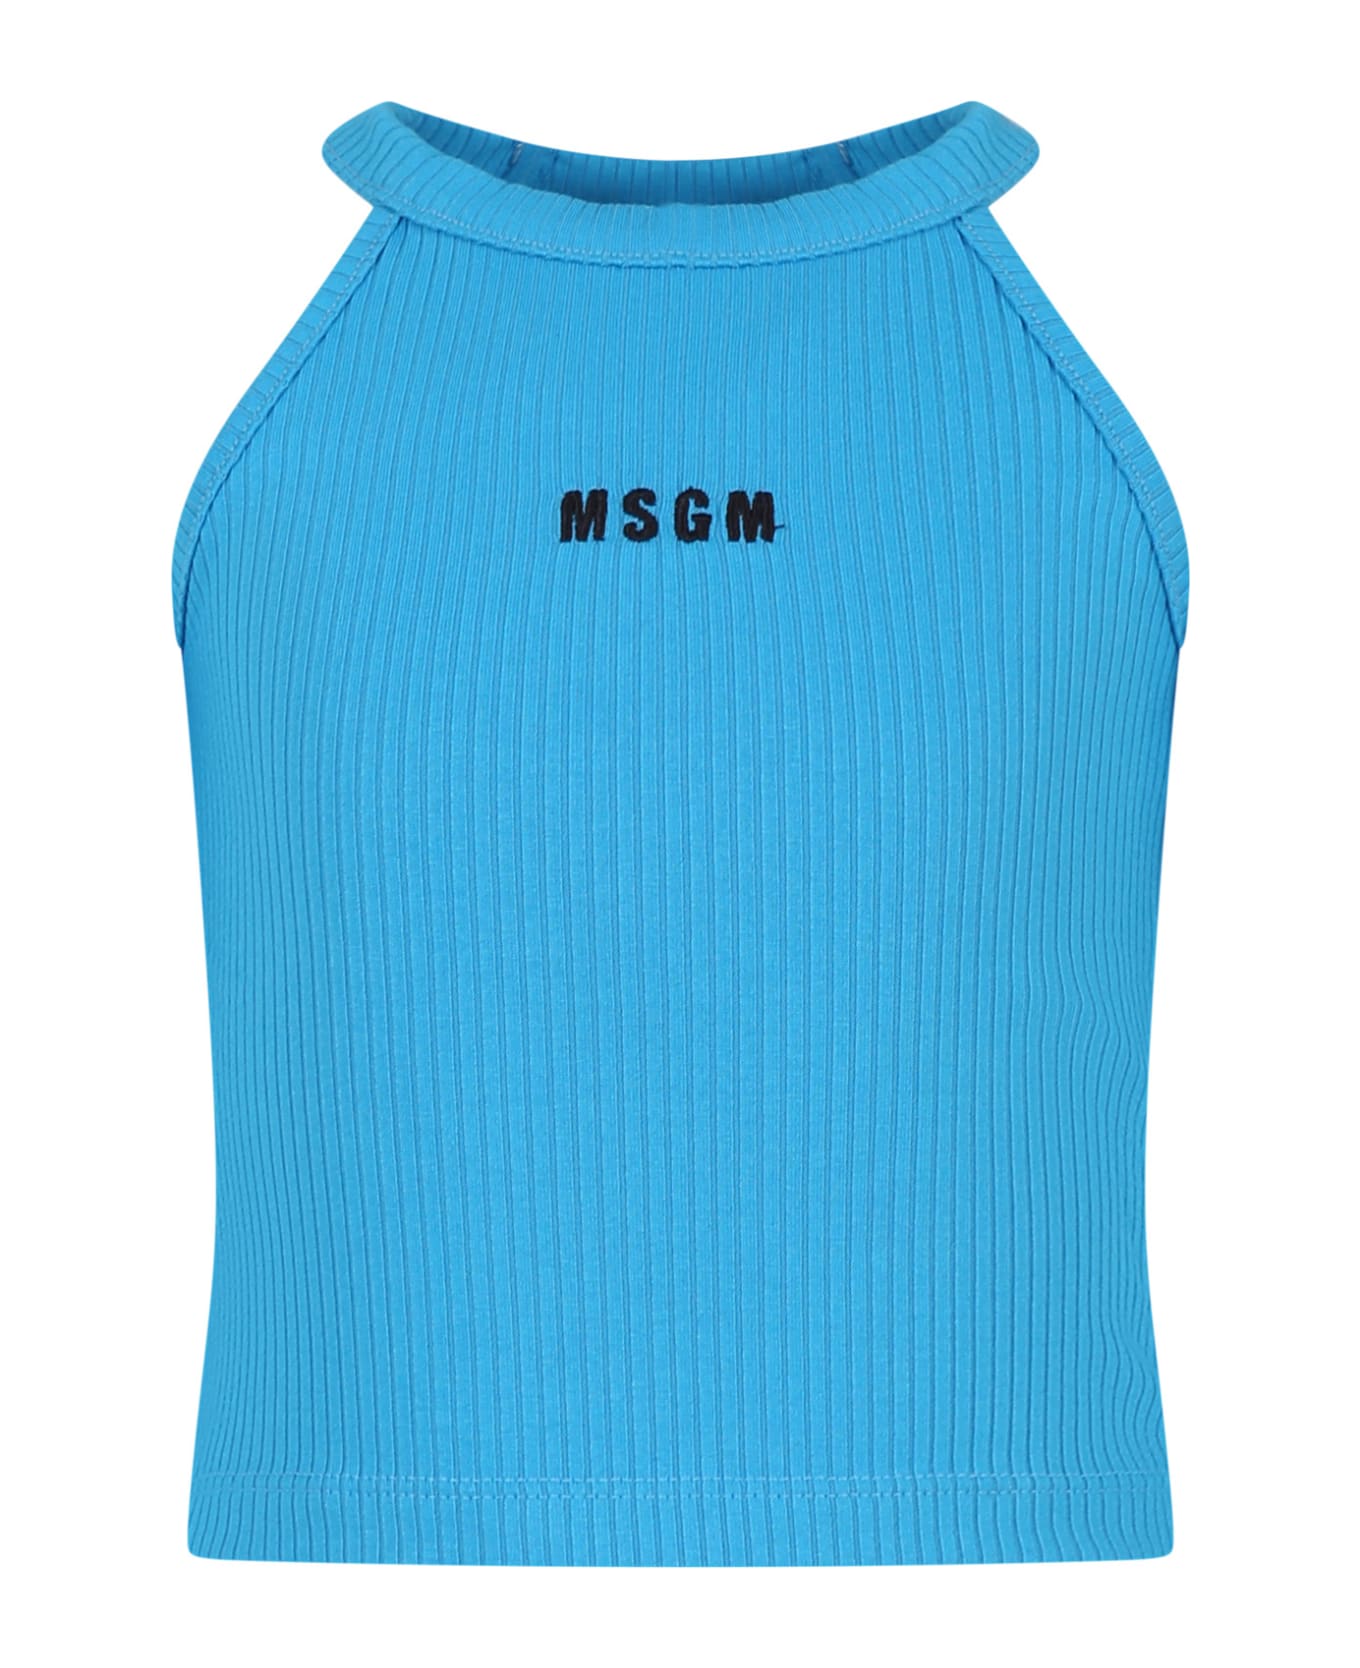 MSGM Light Blue Tank Top For Girl With Logo - Light Blue